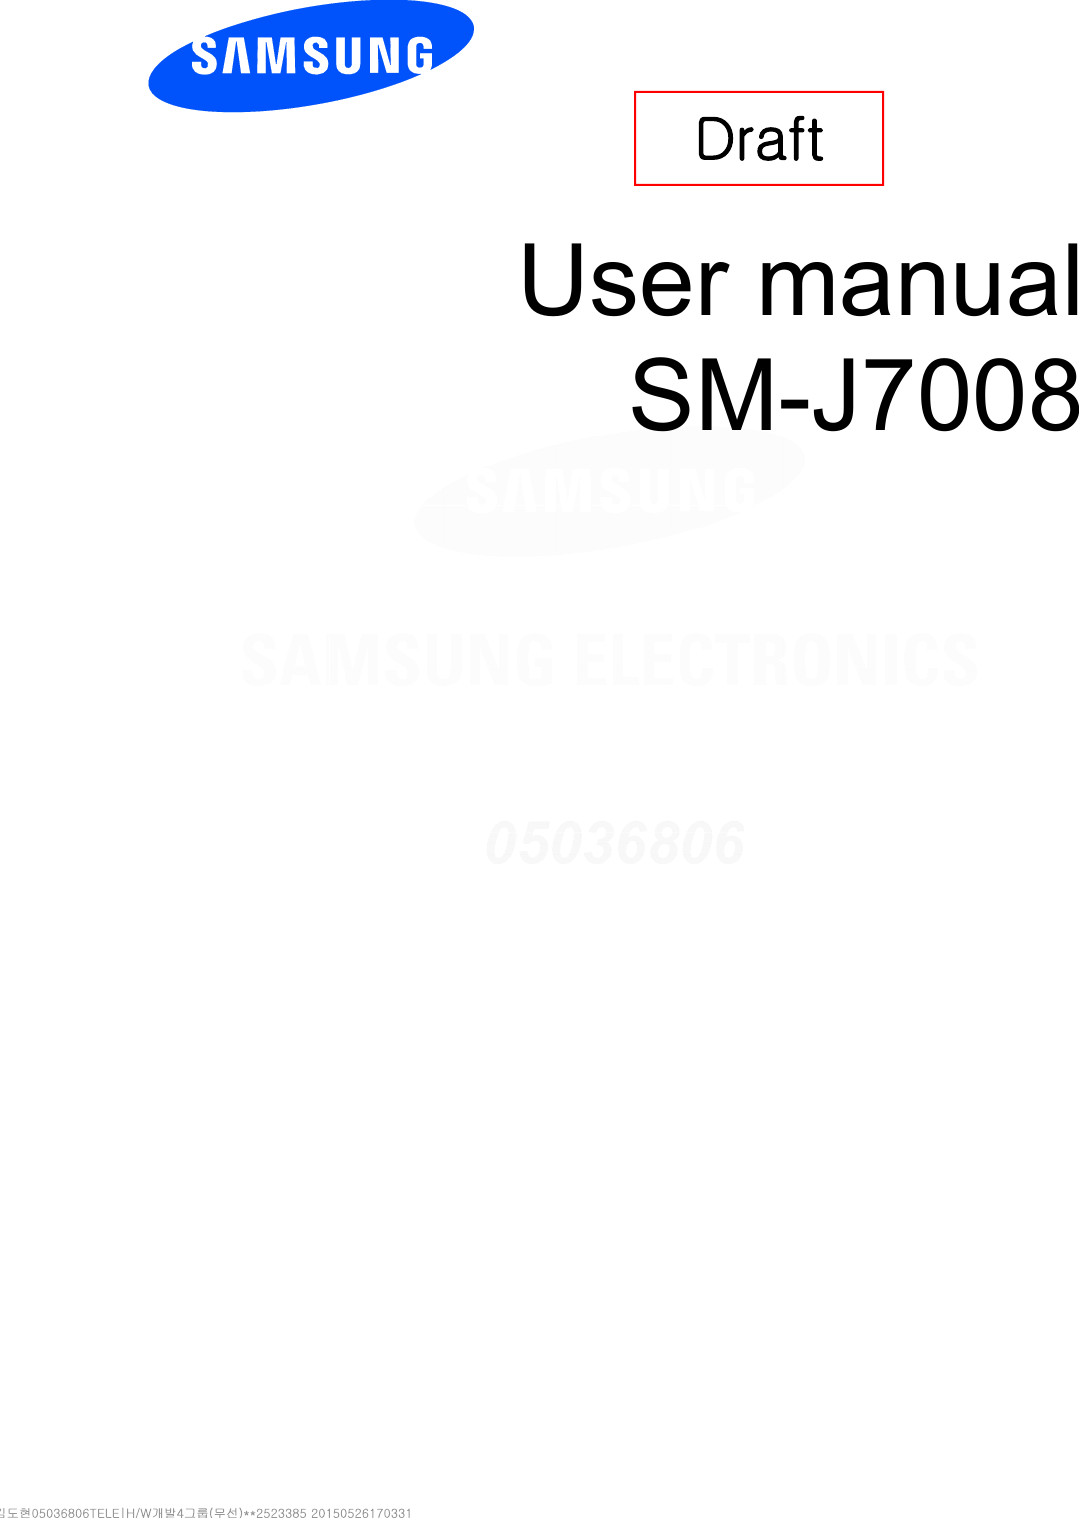       User manual SM-J7008       Draft   